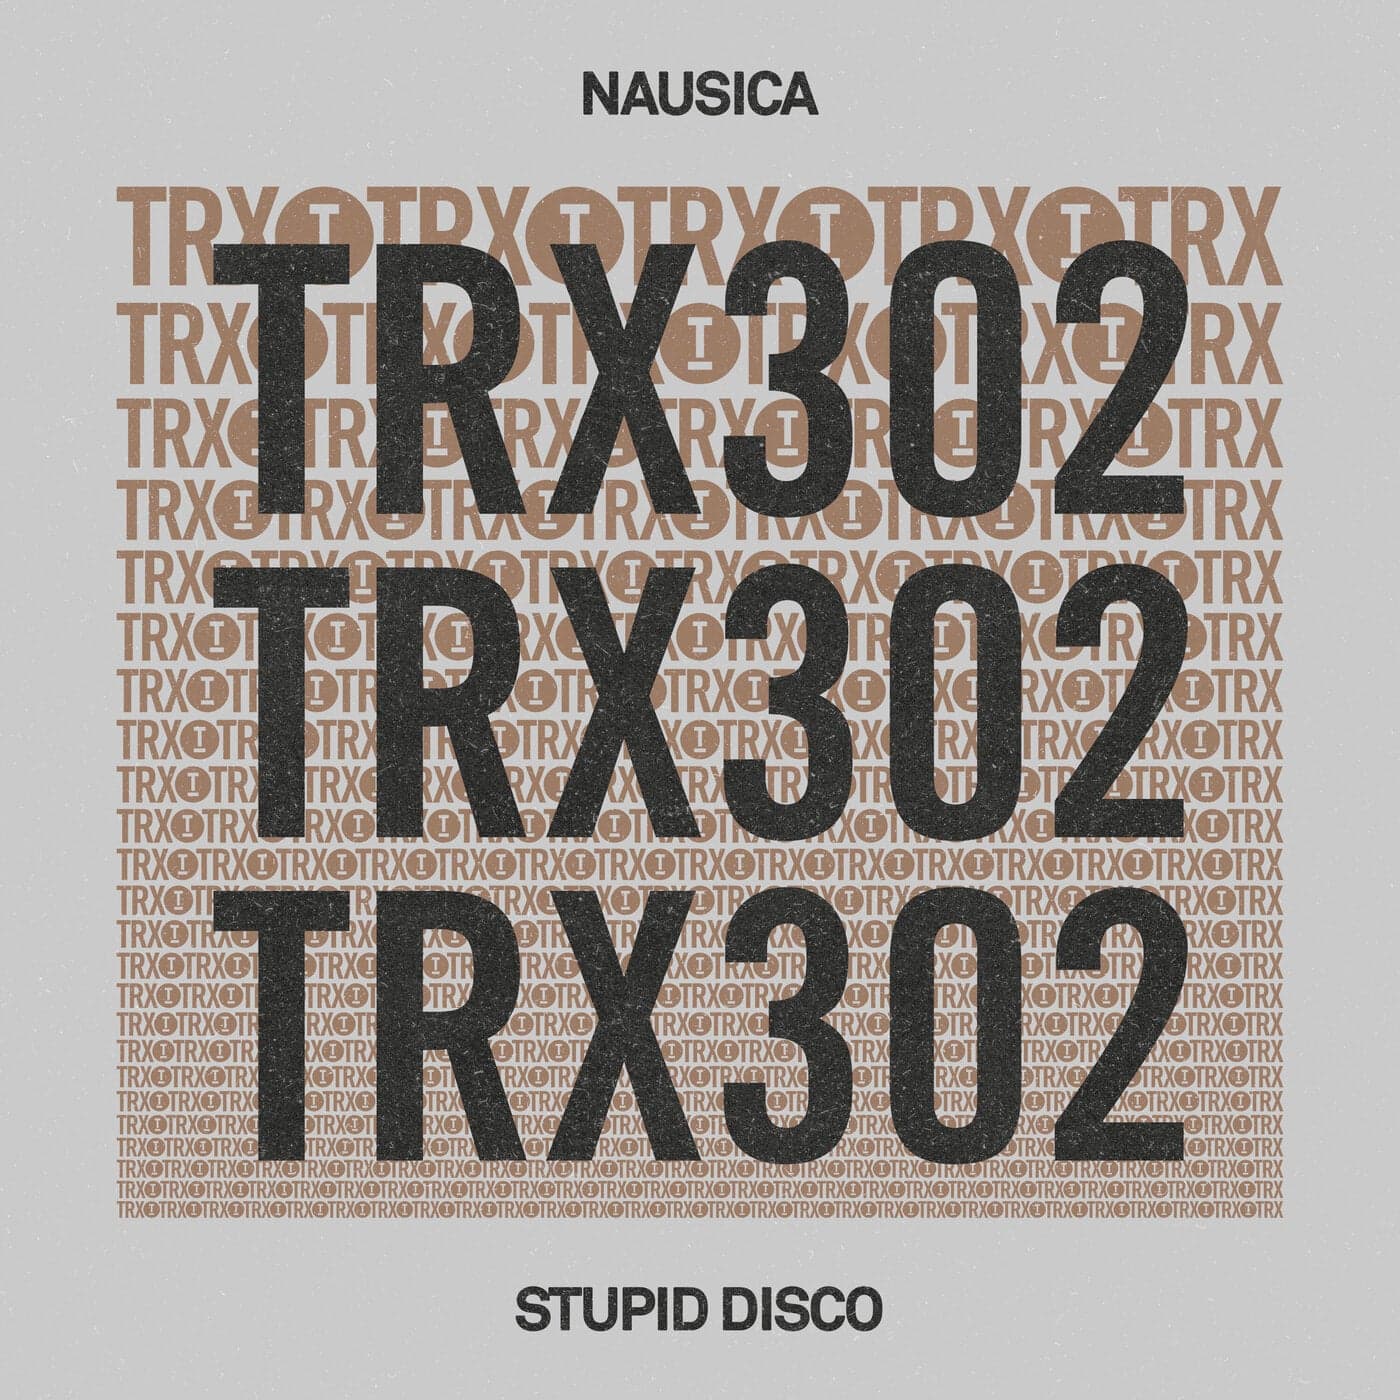 image cover: Nausica - Stupid Disco on Toolroom Trax